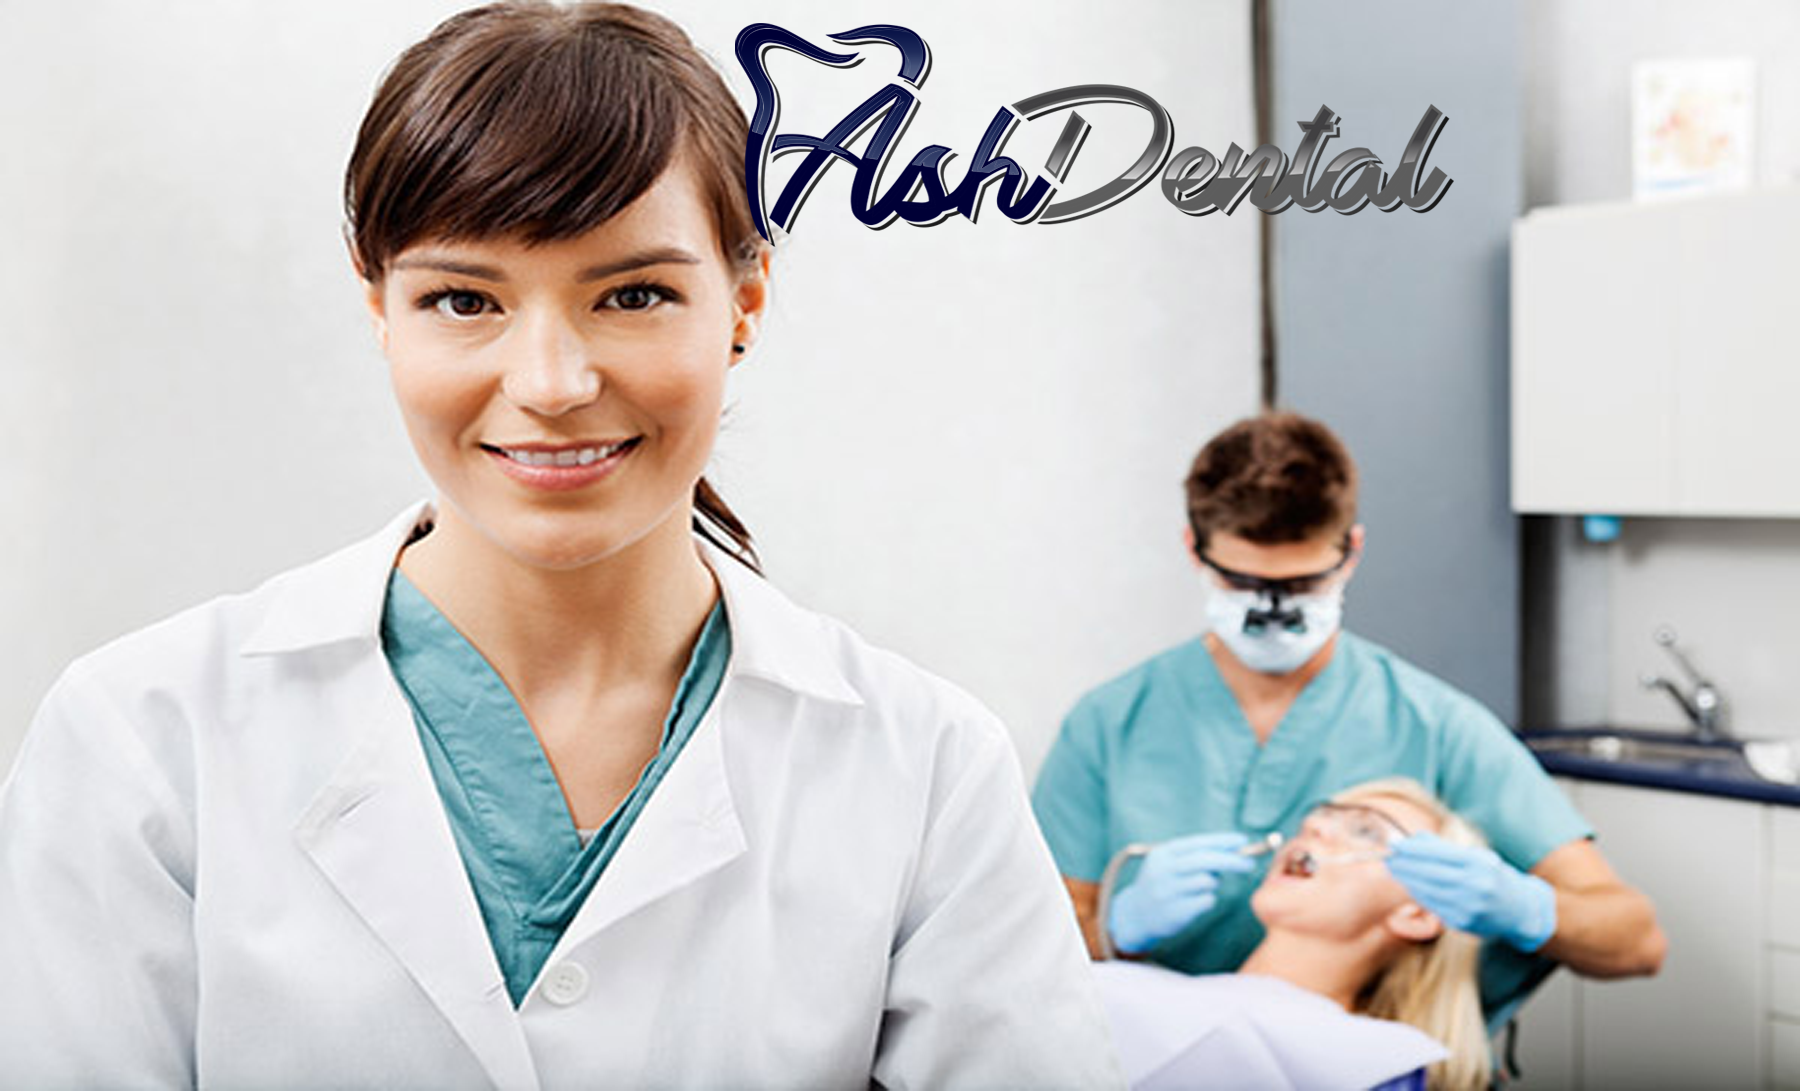 ASH Dental Oral Health | ASH Dental Irvine